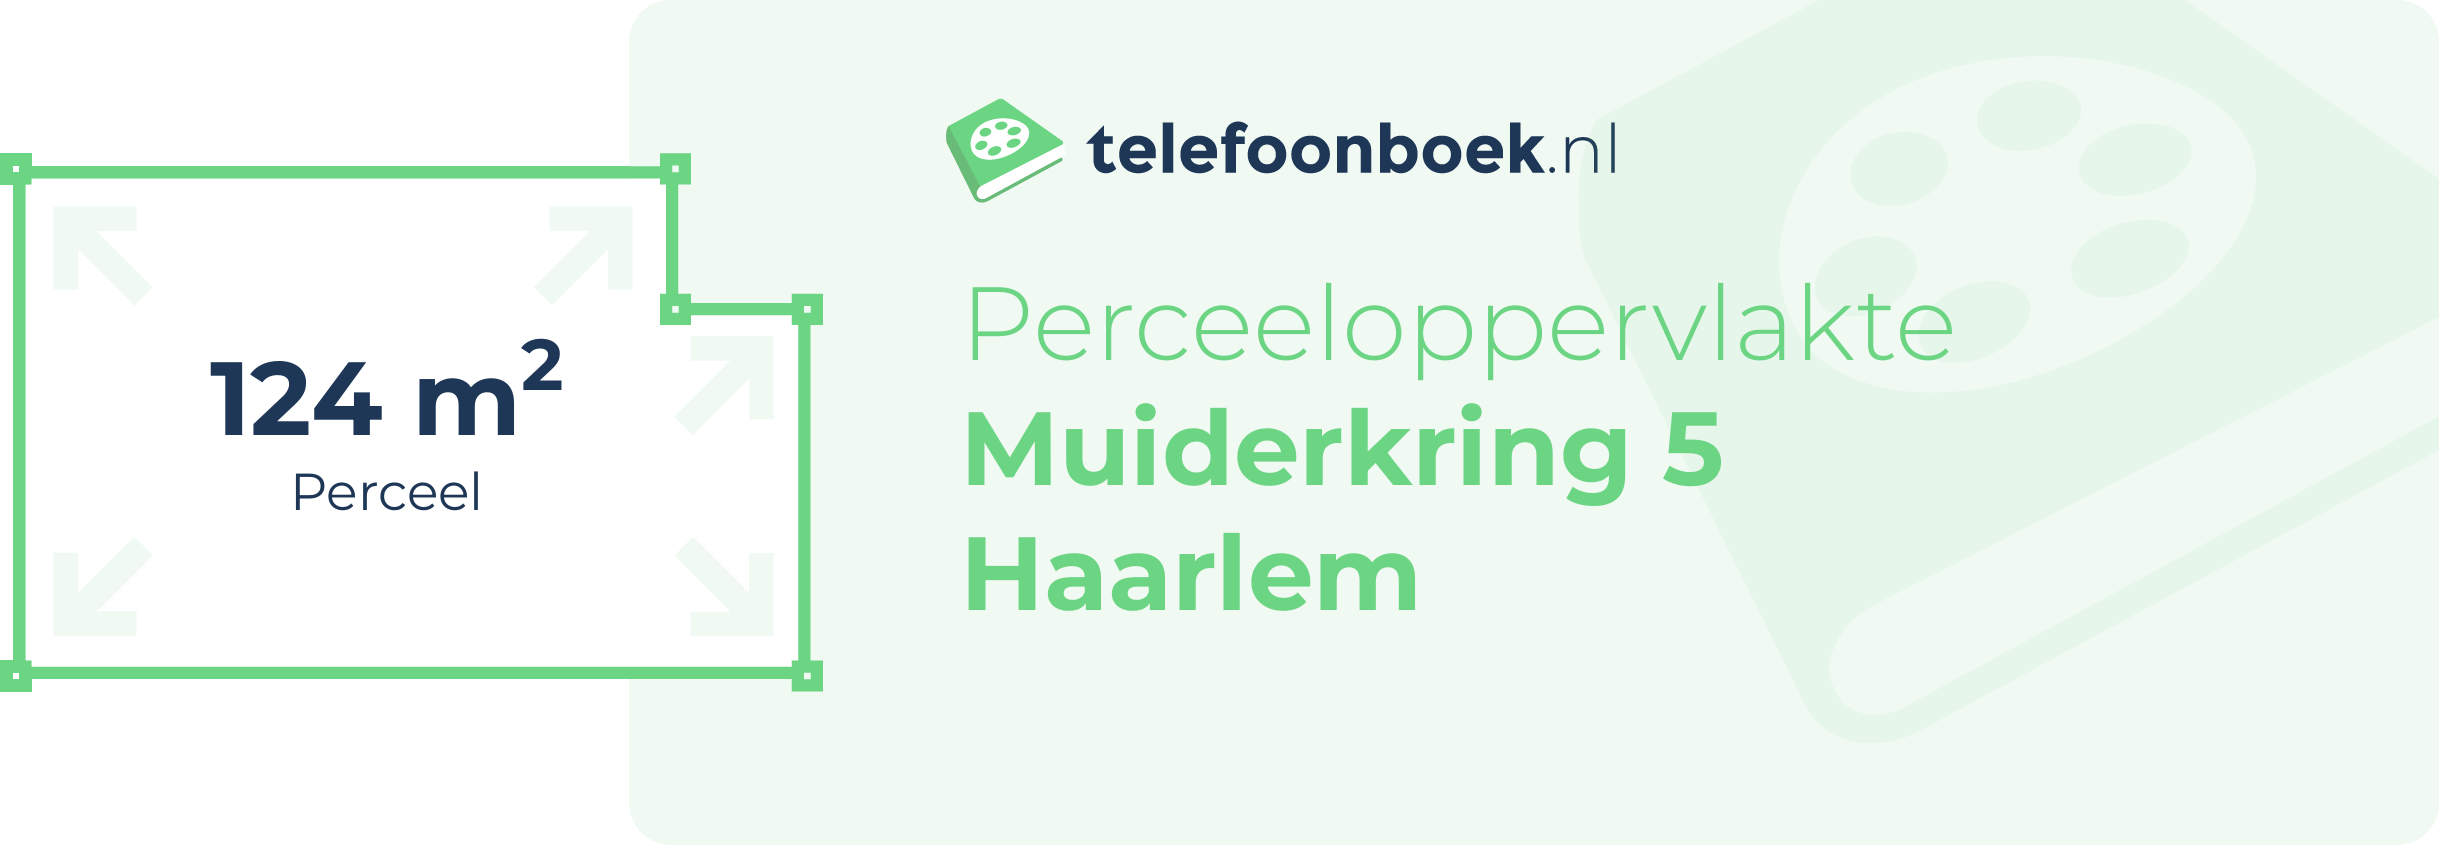 Perceeloppervlakte Muiderkring 5 Haarlem